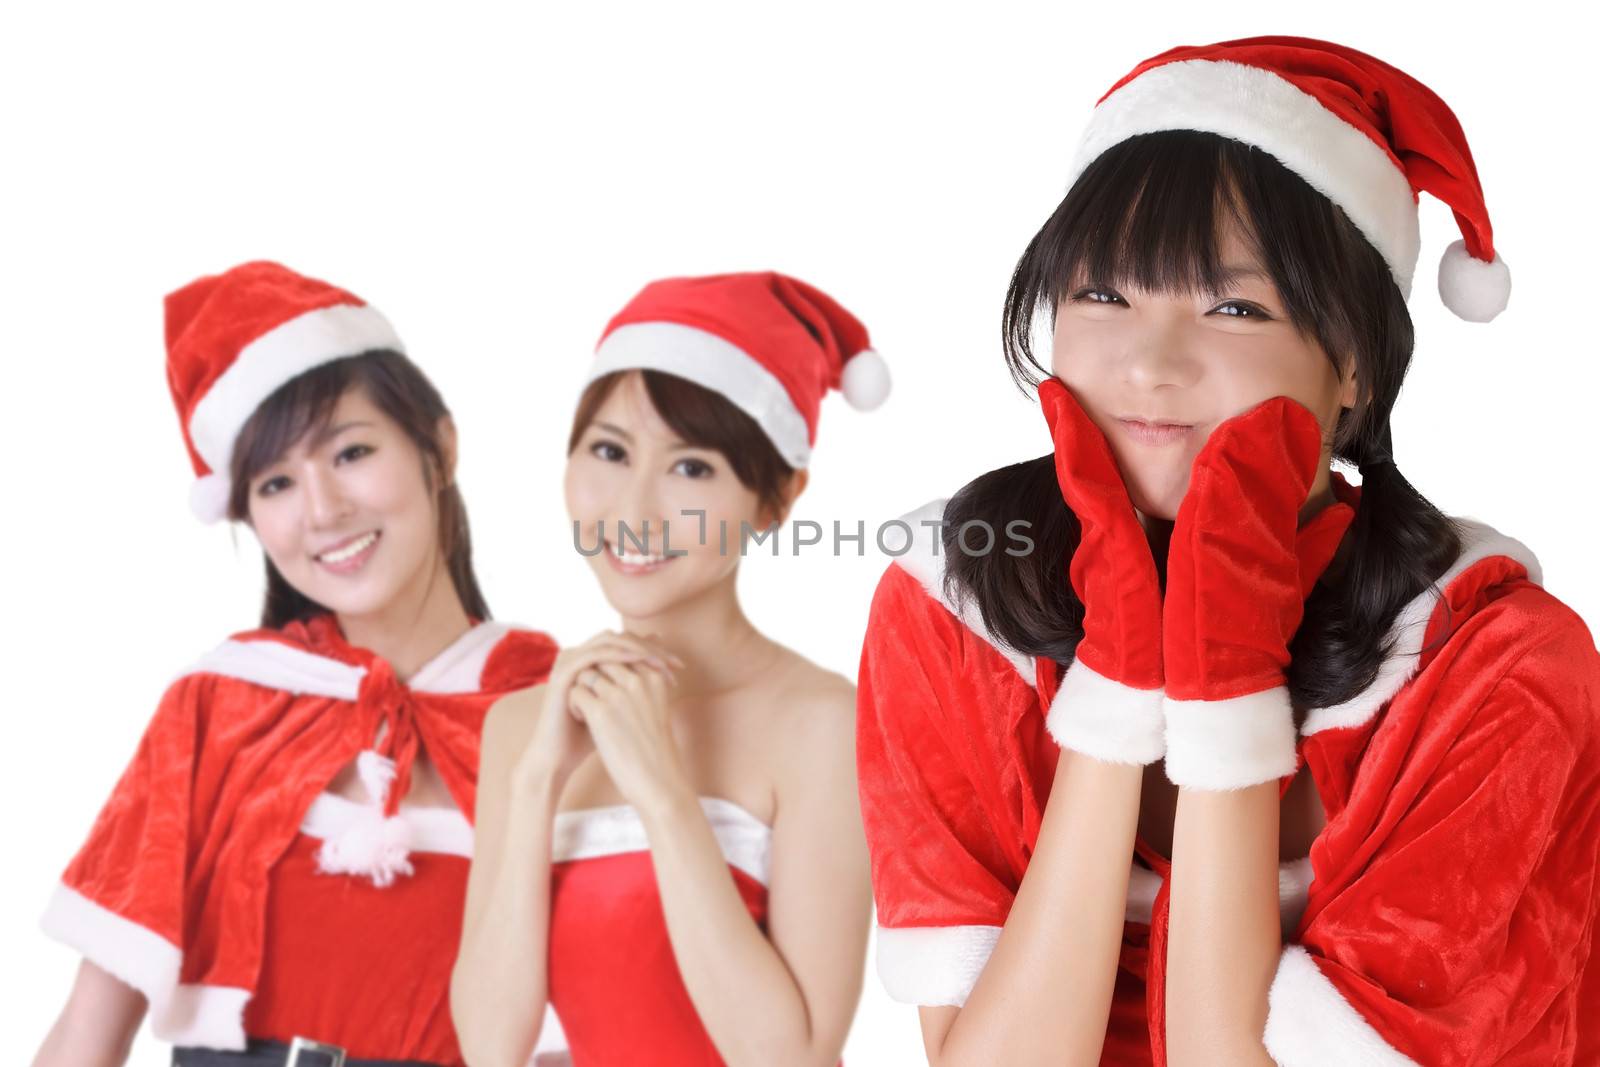 Happy smiling Asian Christmas girls, closeup portrait of three young women.